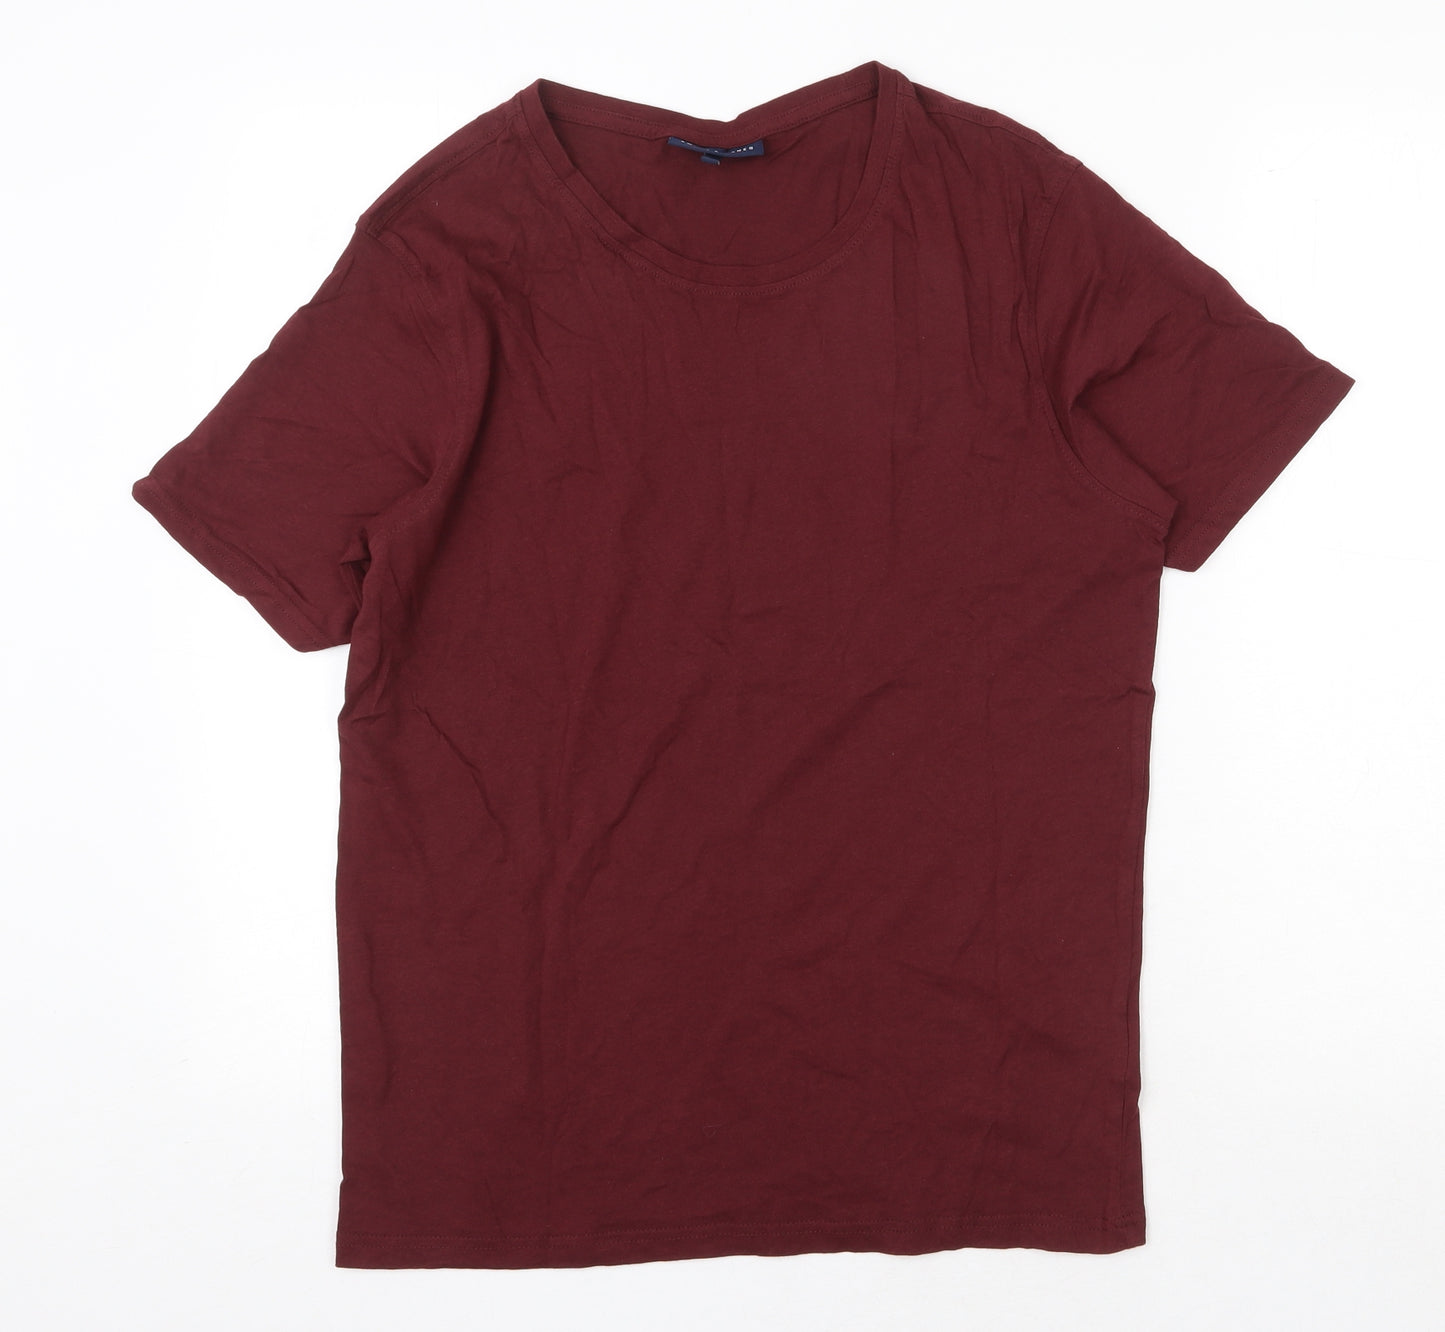 Smith & Jones Womens Red 100% Cotton Basic T-Shirt Size M Round Neck